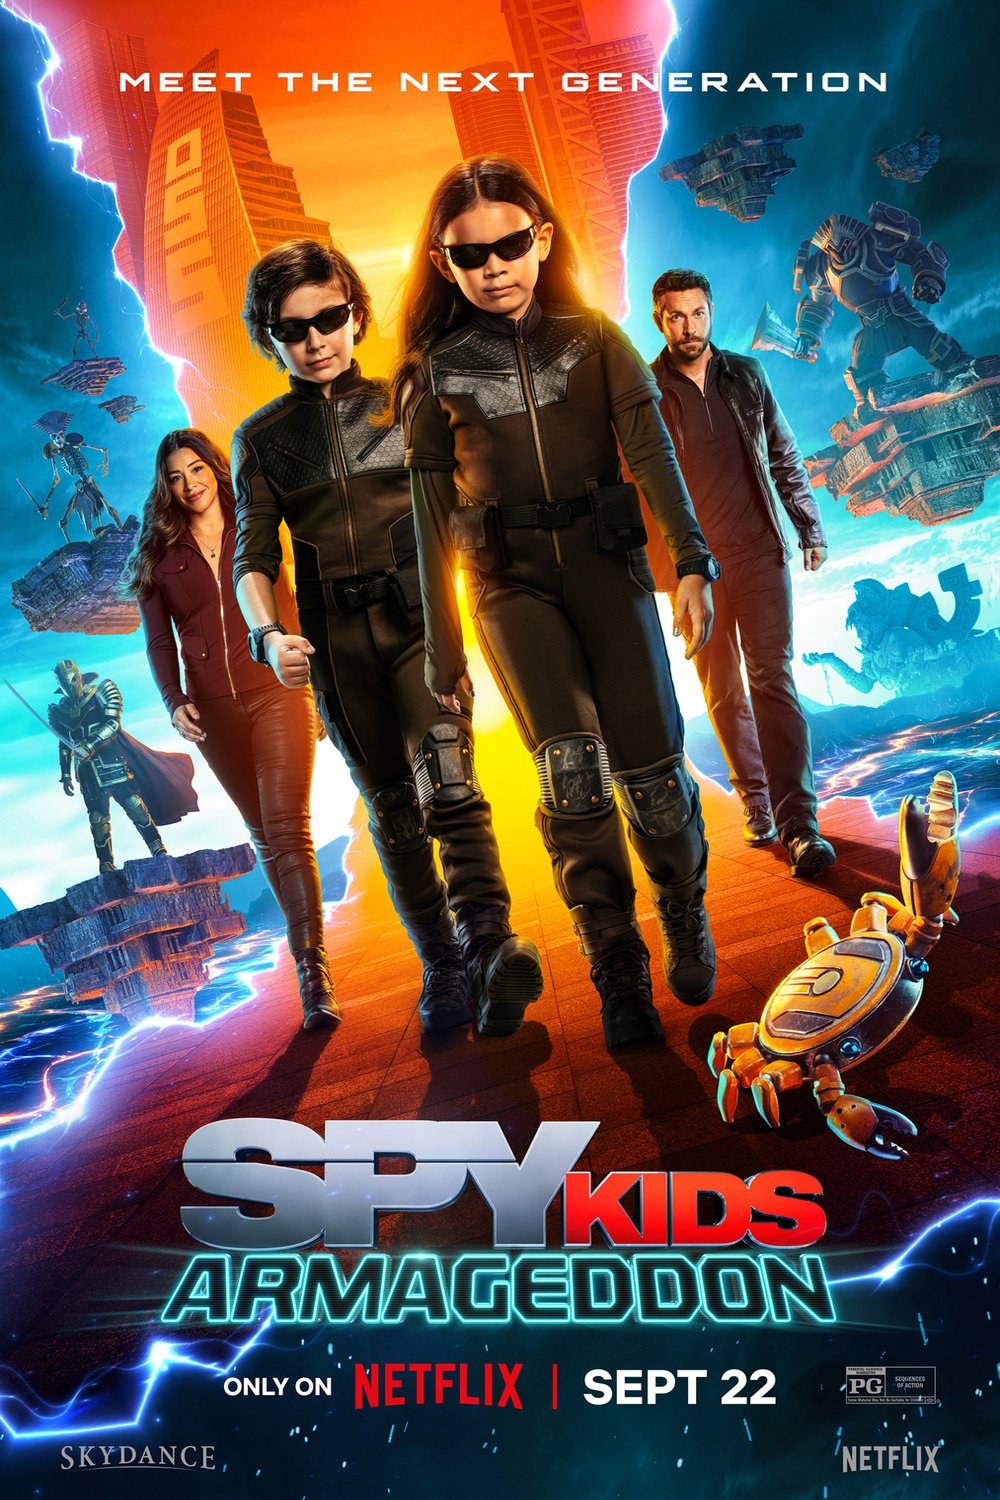 Poster of the movie Spy Kids: Armageddon